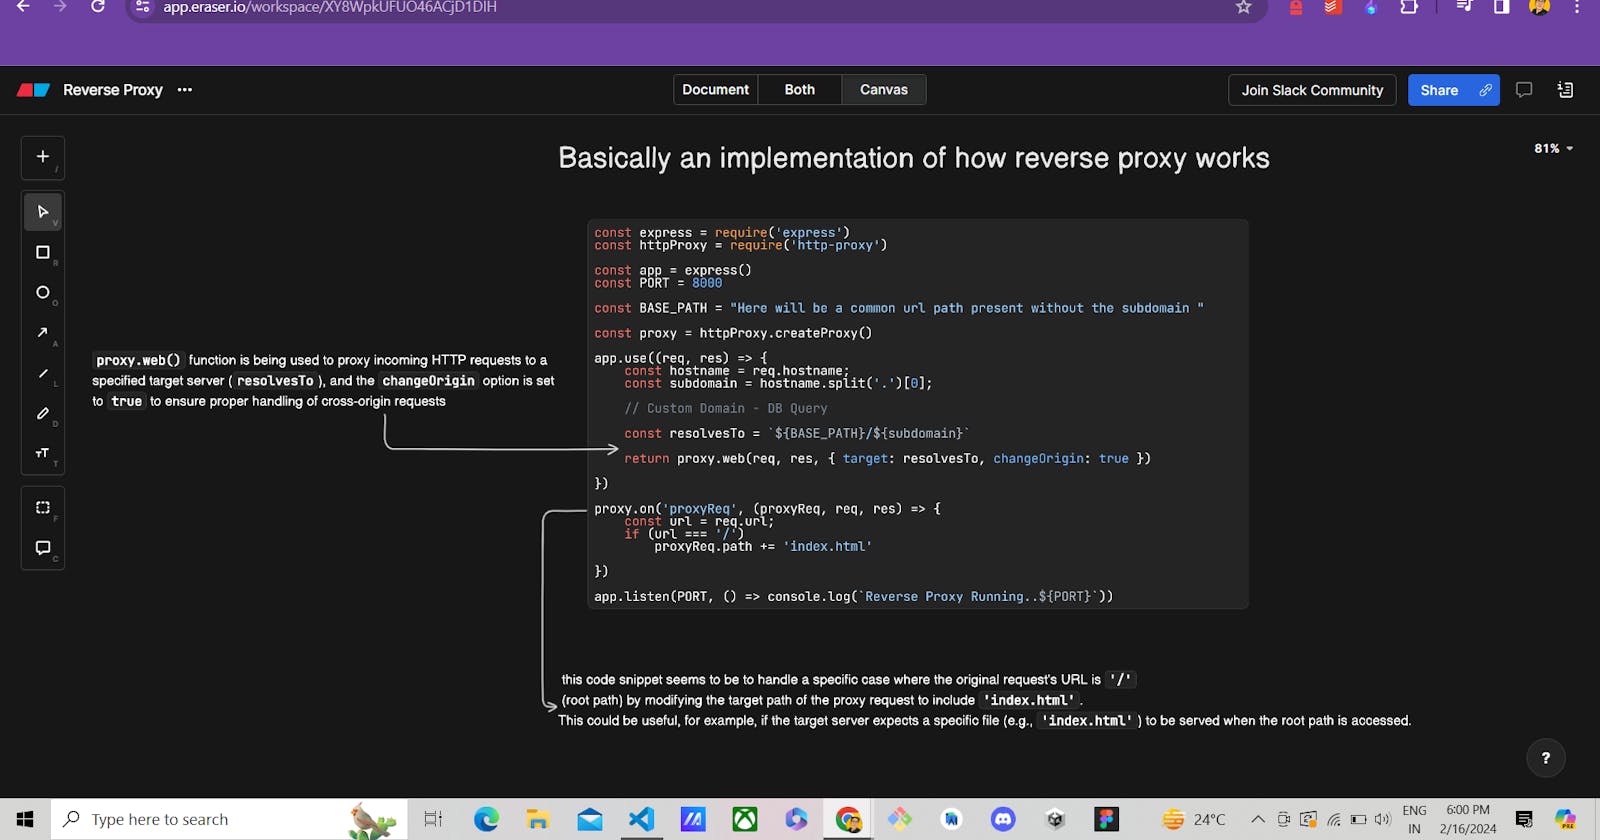 Implementation of Reverse Proxy in Node js